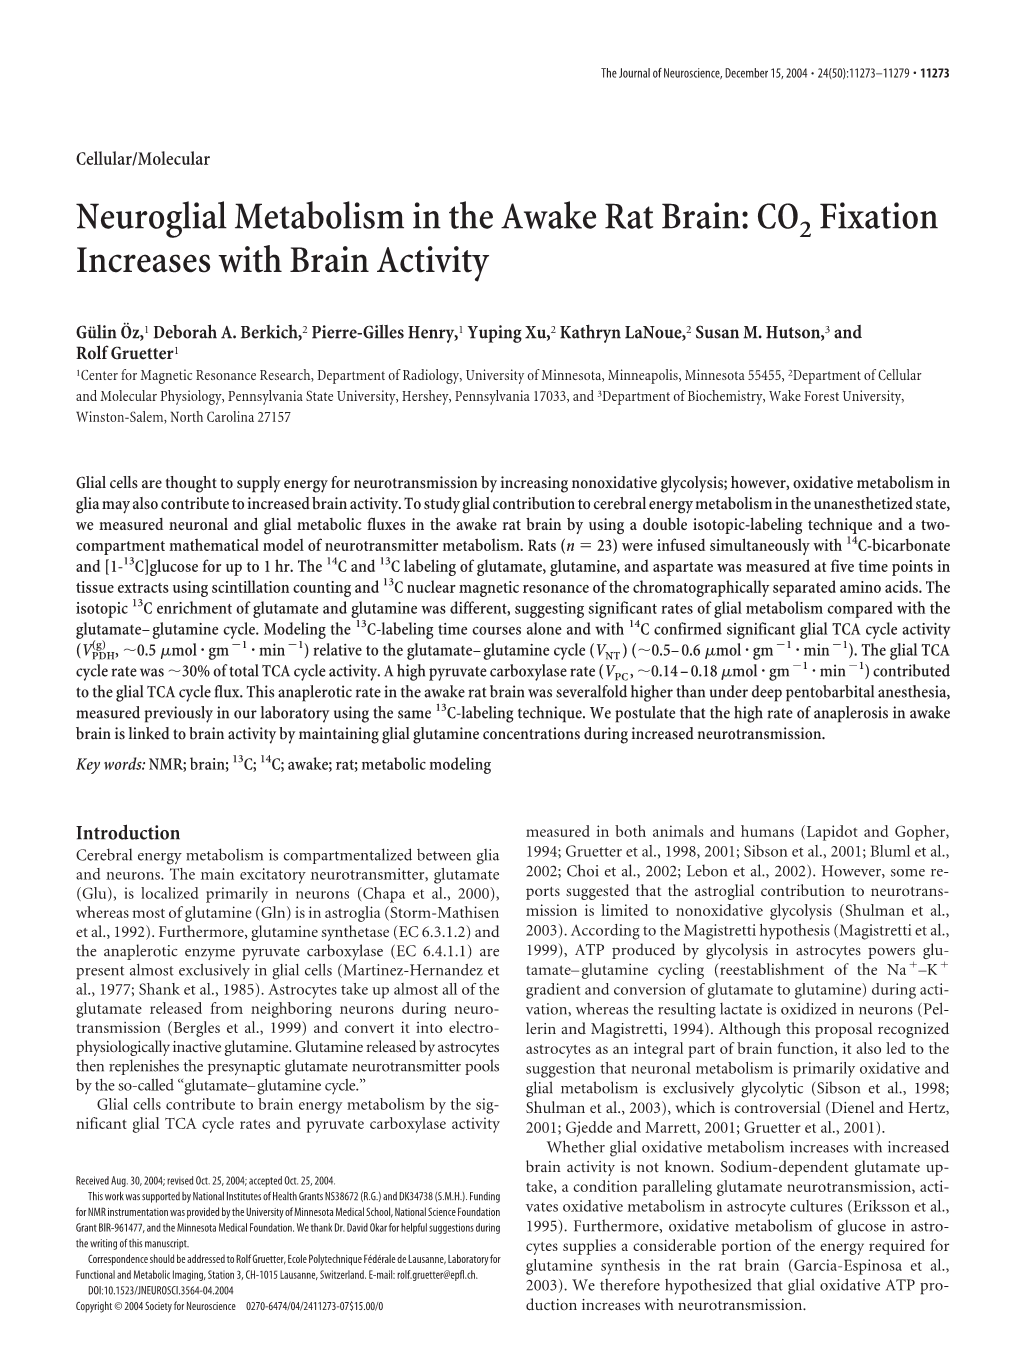 Neuroglial Metabolism in the Awake Rat Brain: CO2 Fixation Increases with Brain Activity